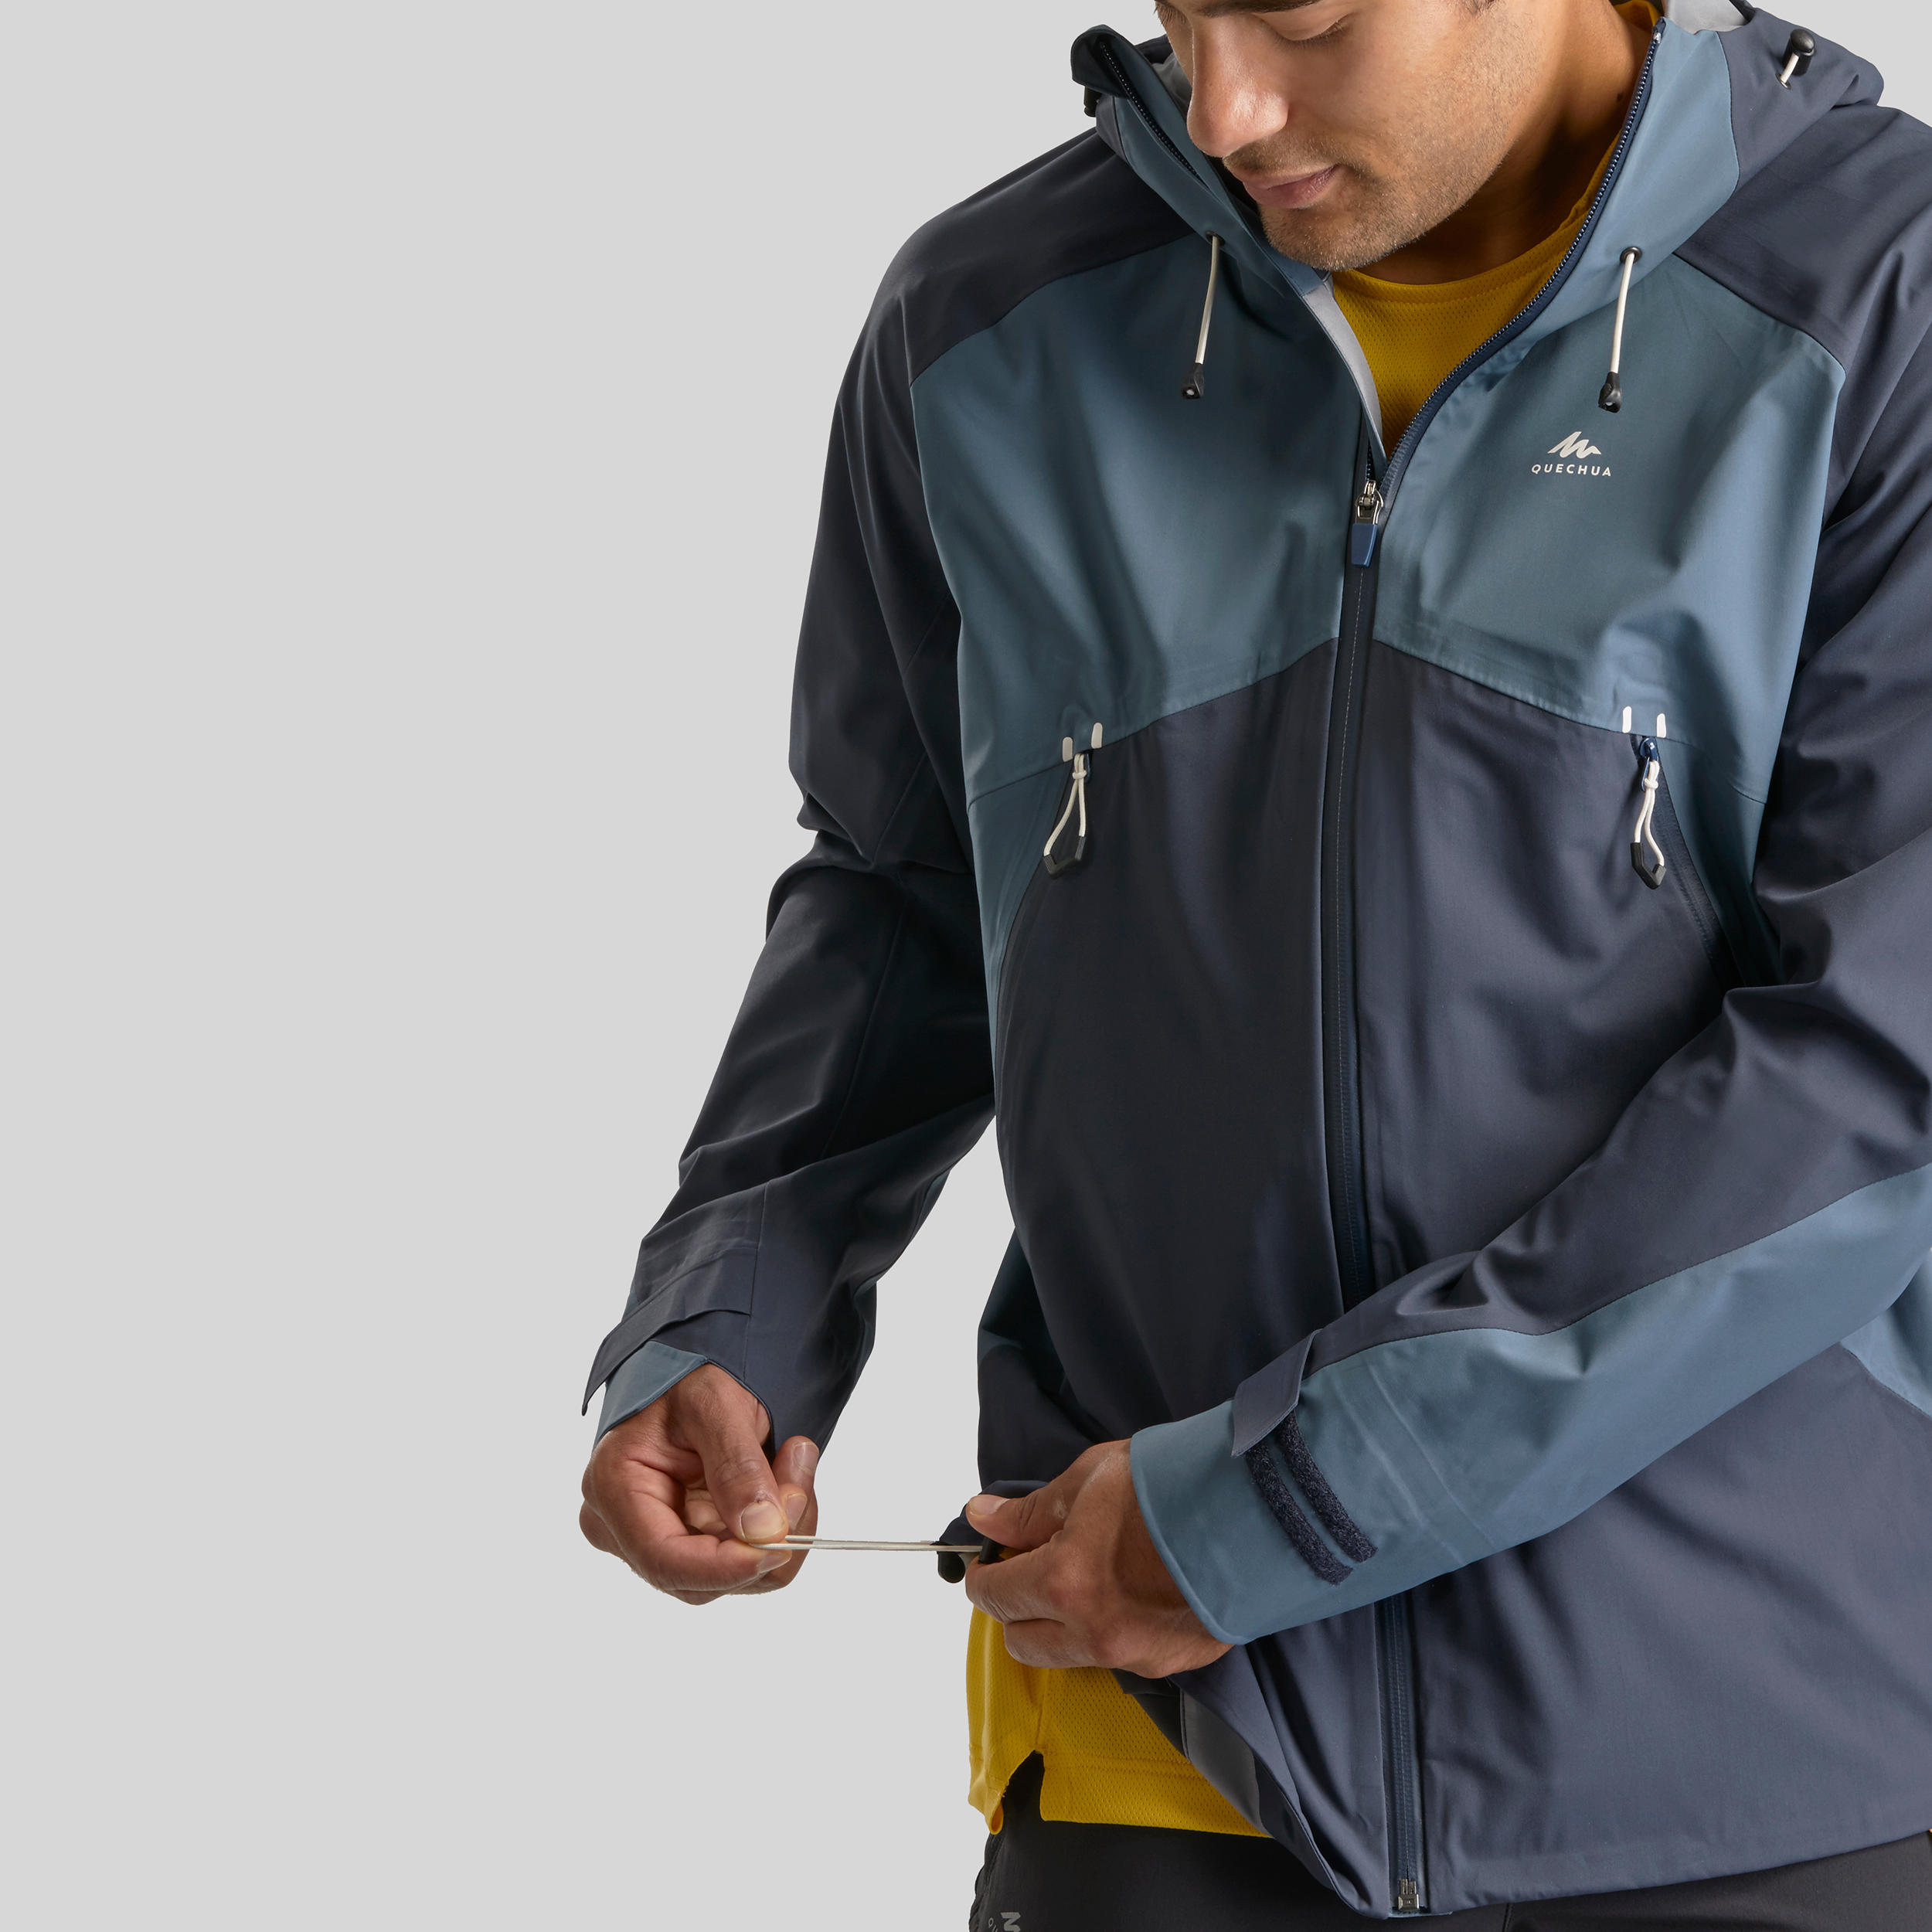 quechua mh500 men's waterproof jacket review